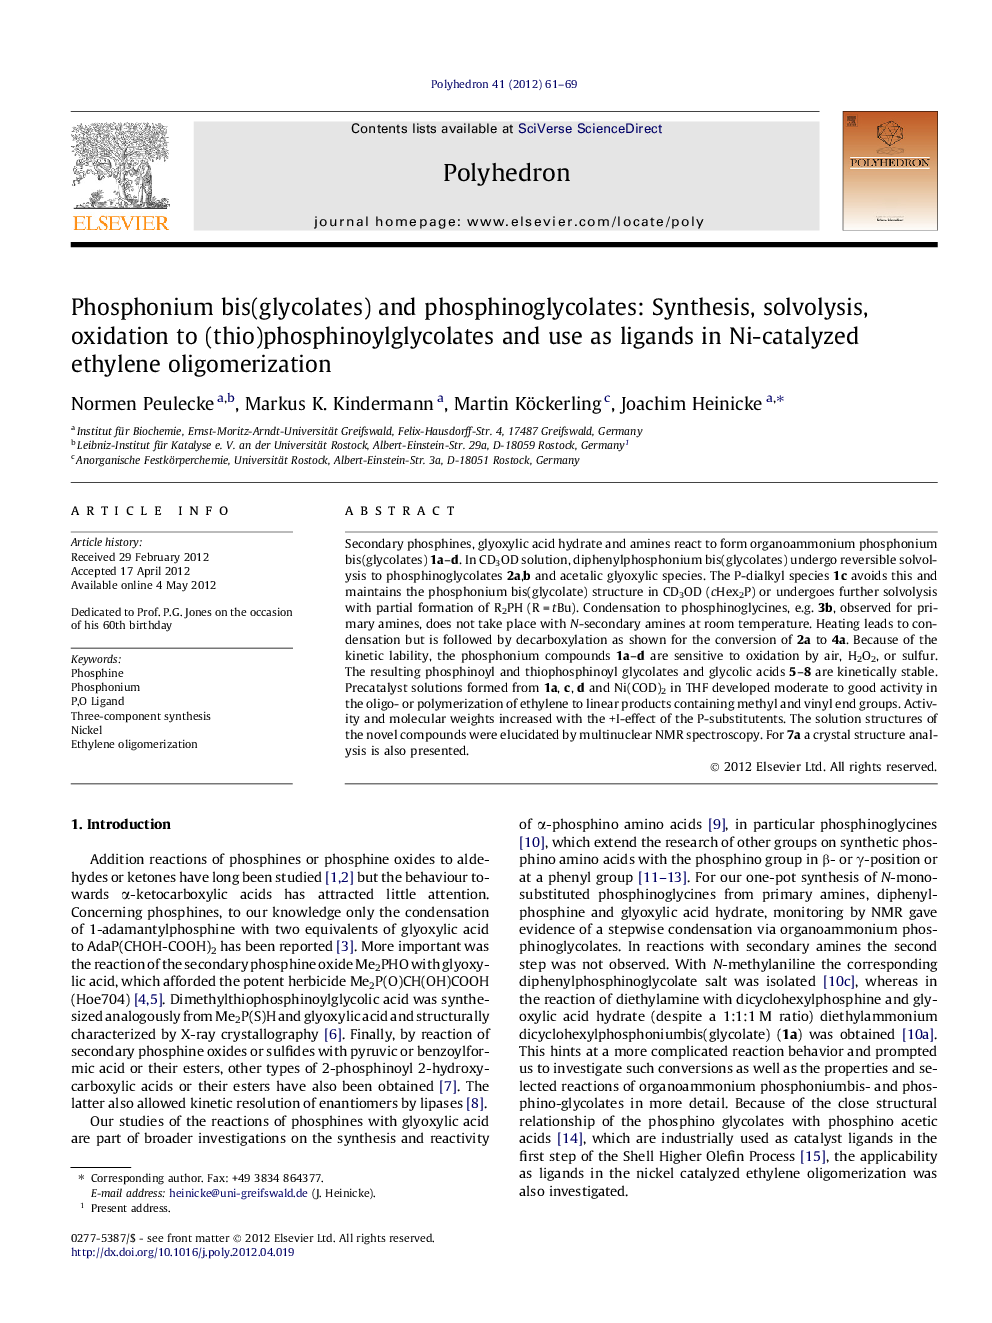 Phosphonium bis(glycolates) and phosphinoglycolates: Synthesis, solvolysis, oxidation to (thio)phosphinoylglycolates and use as ligands in Ni-catalyzed ethylene oligomerization